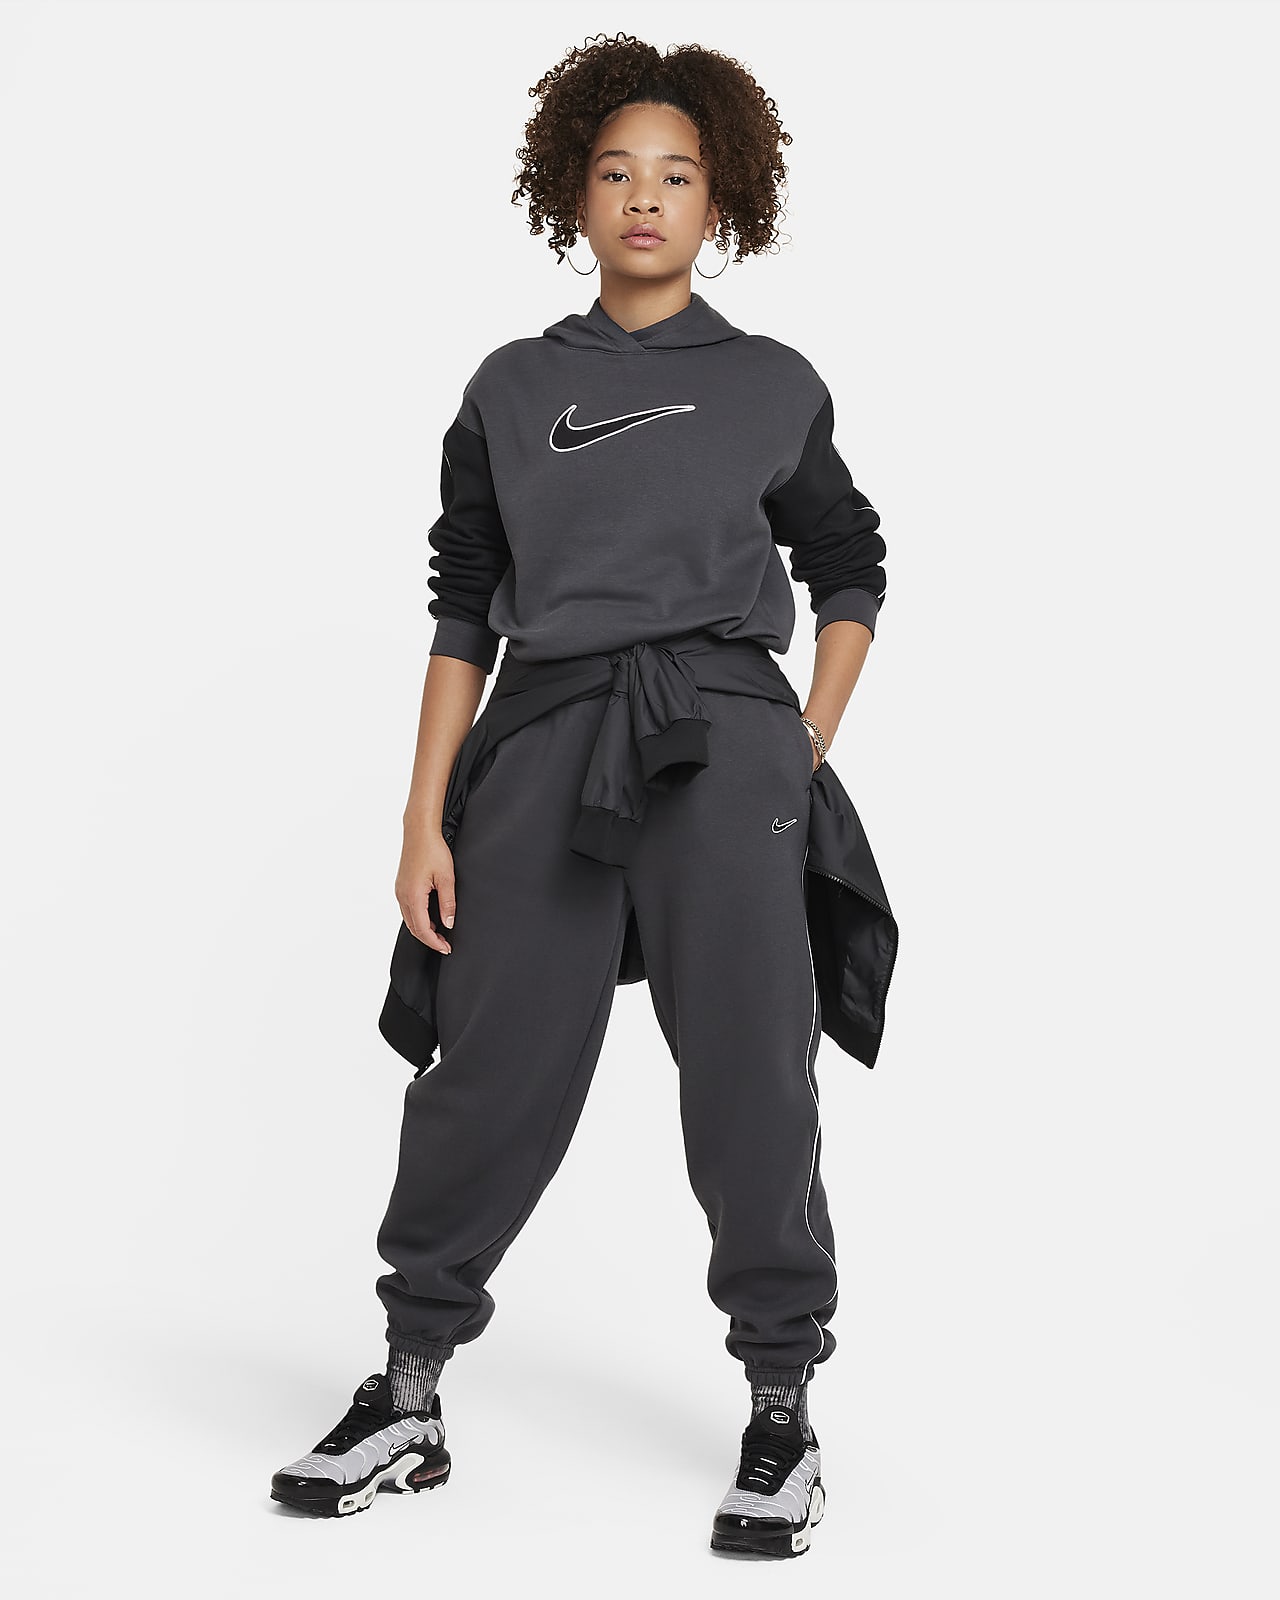 Nike Girls Sportswear - Baby Tracksuits, £34.99